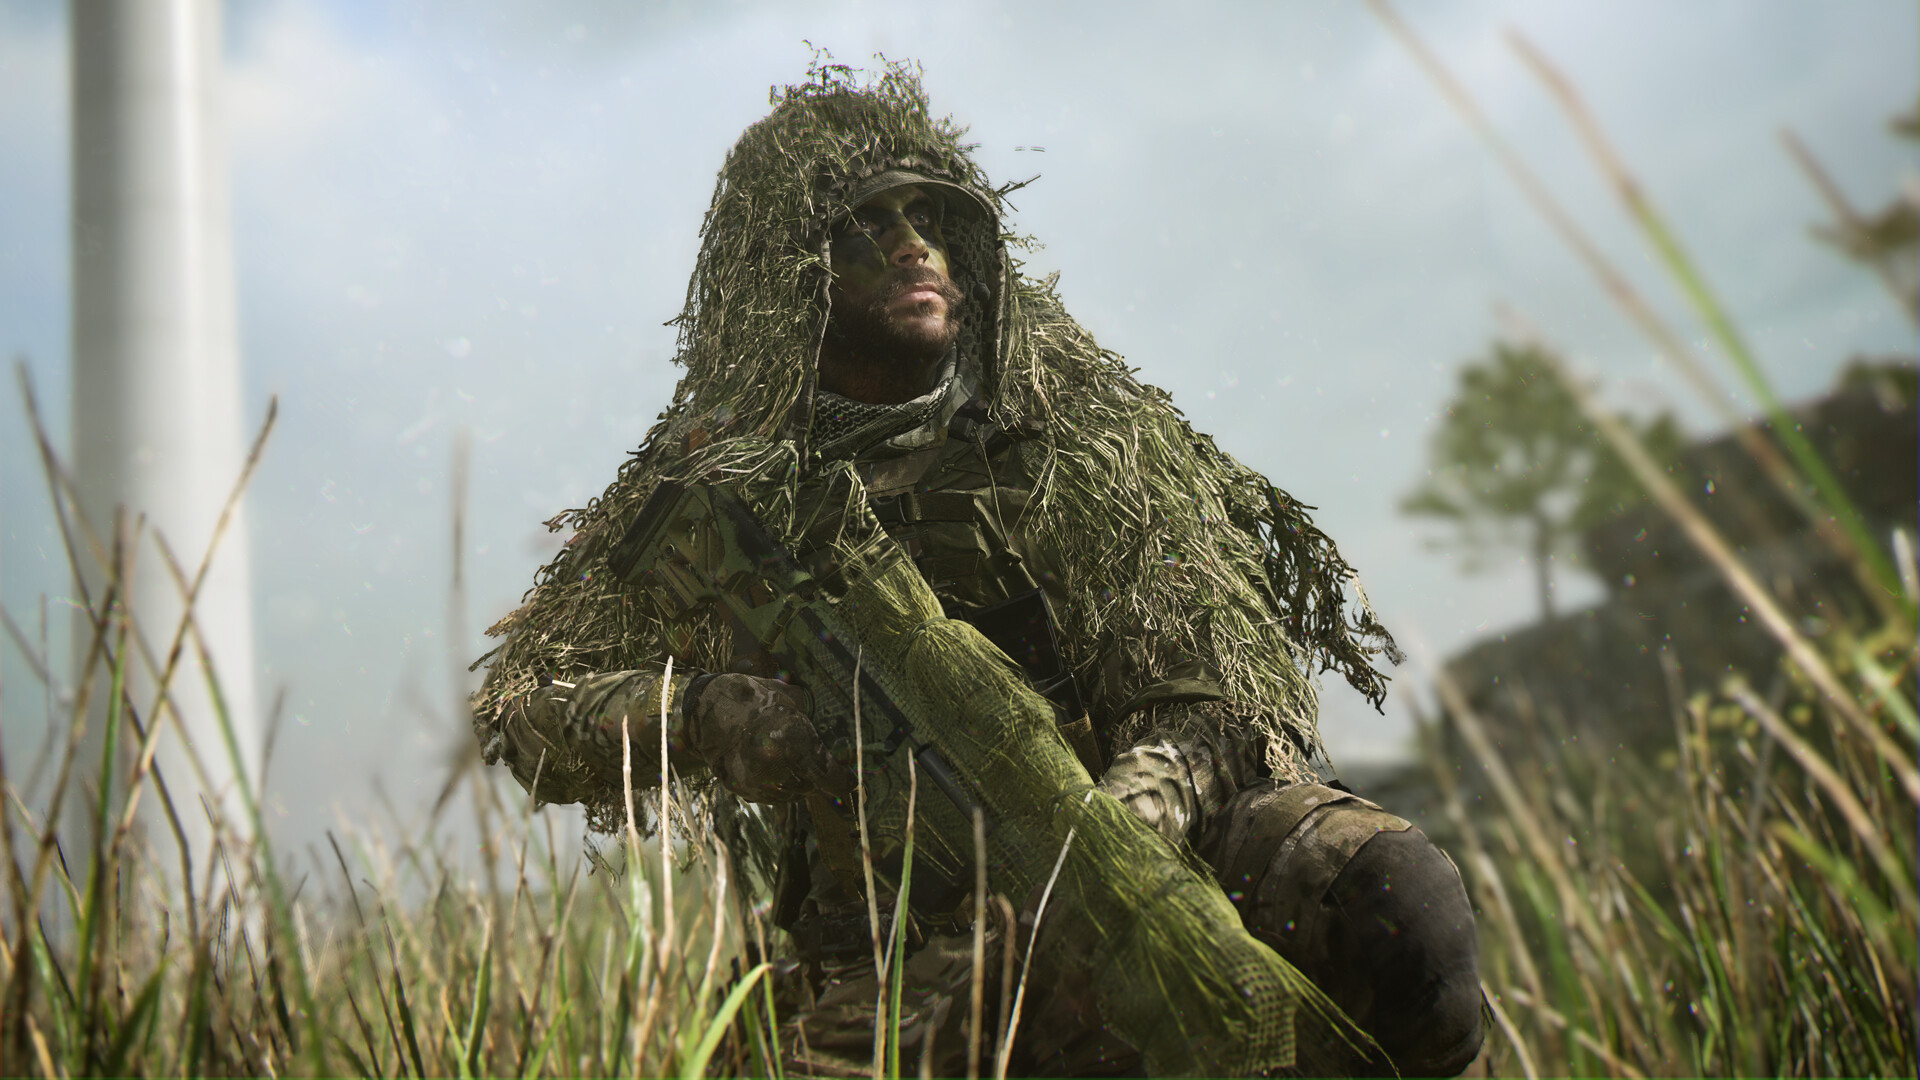 Call Of Duty Moden Warfare 2 Xbox Pacote Multigeração - MauroSPBR